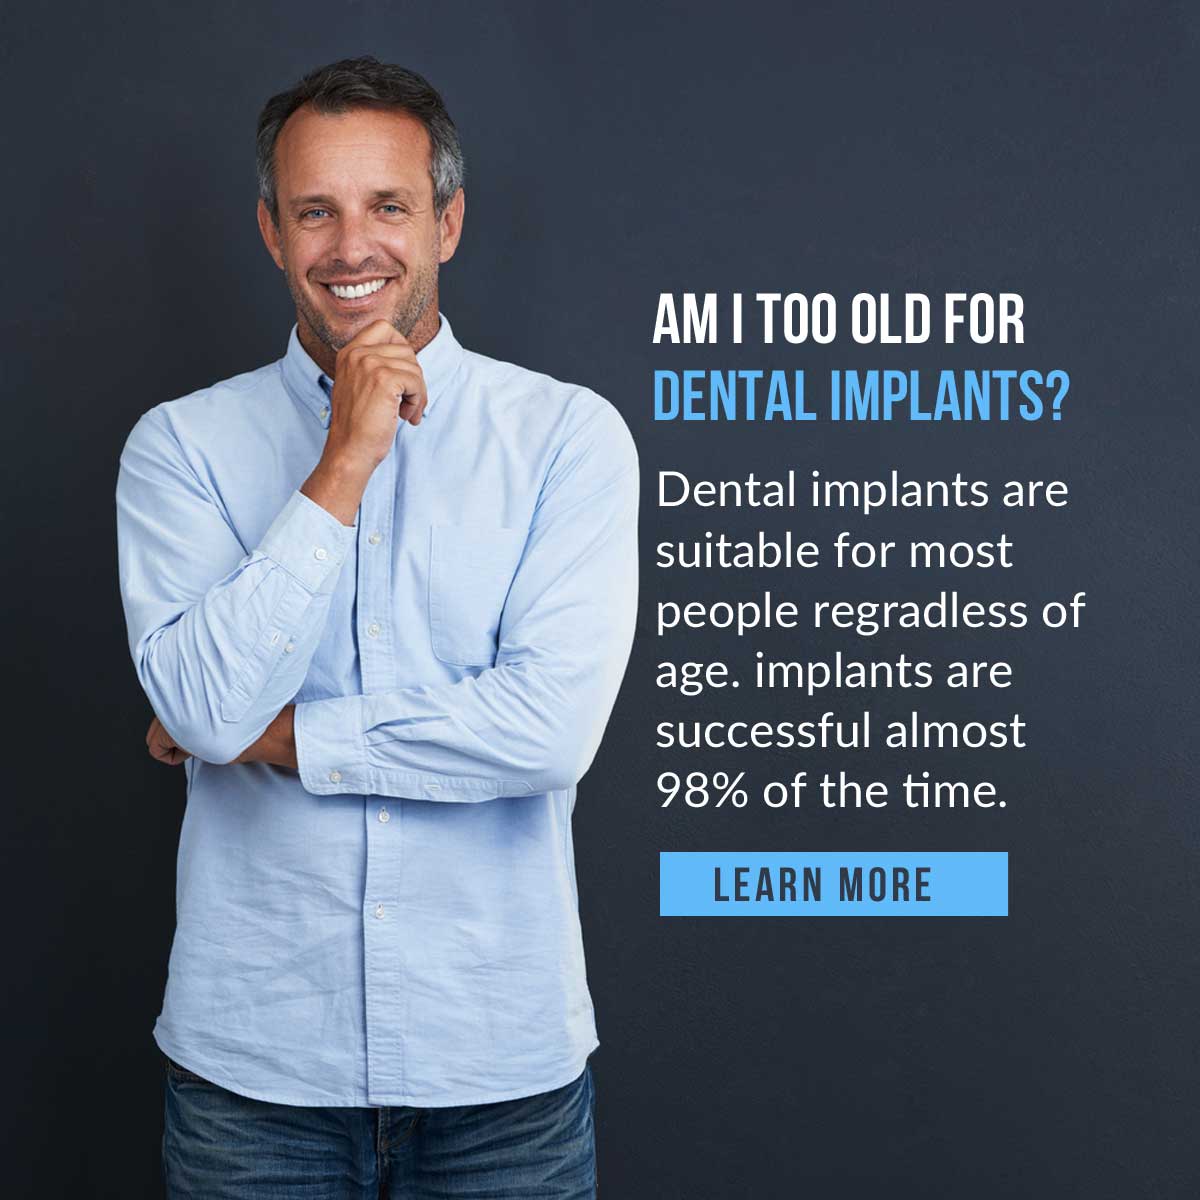 Am I Too Old for Dental Implants?